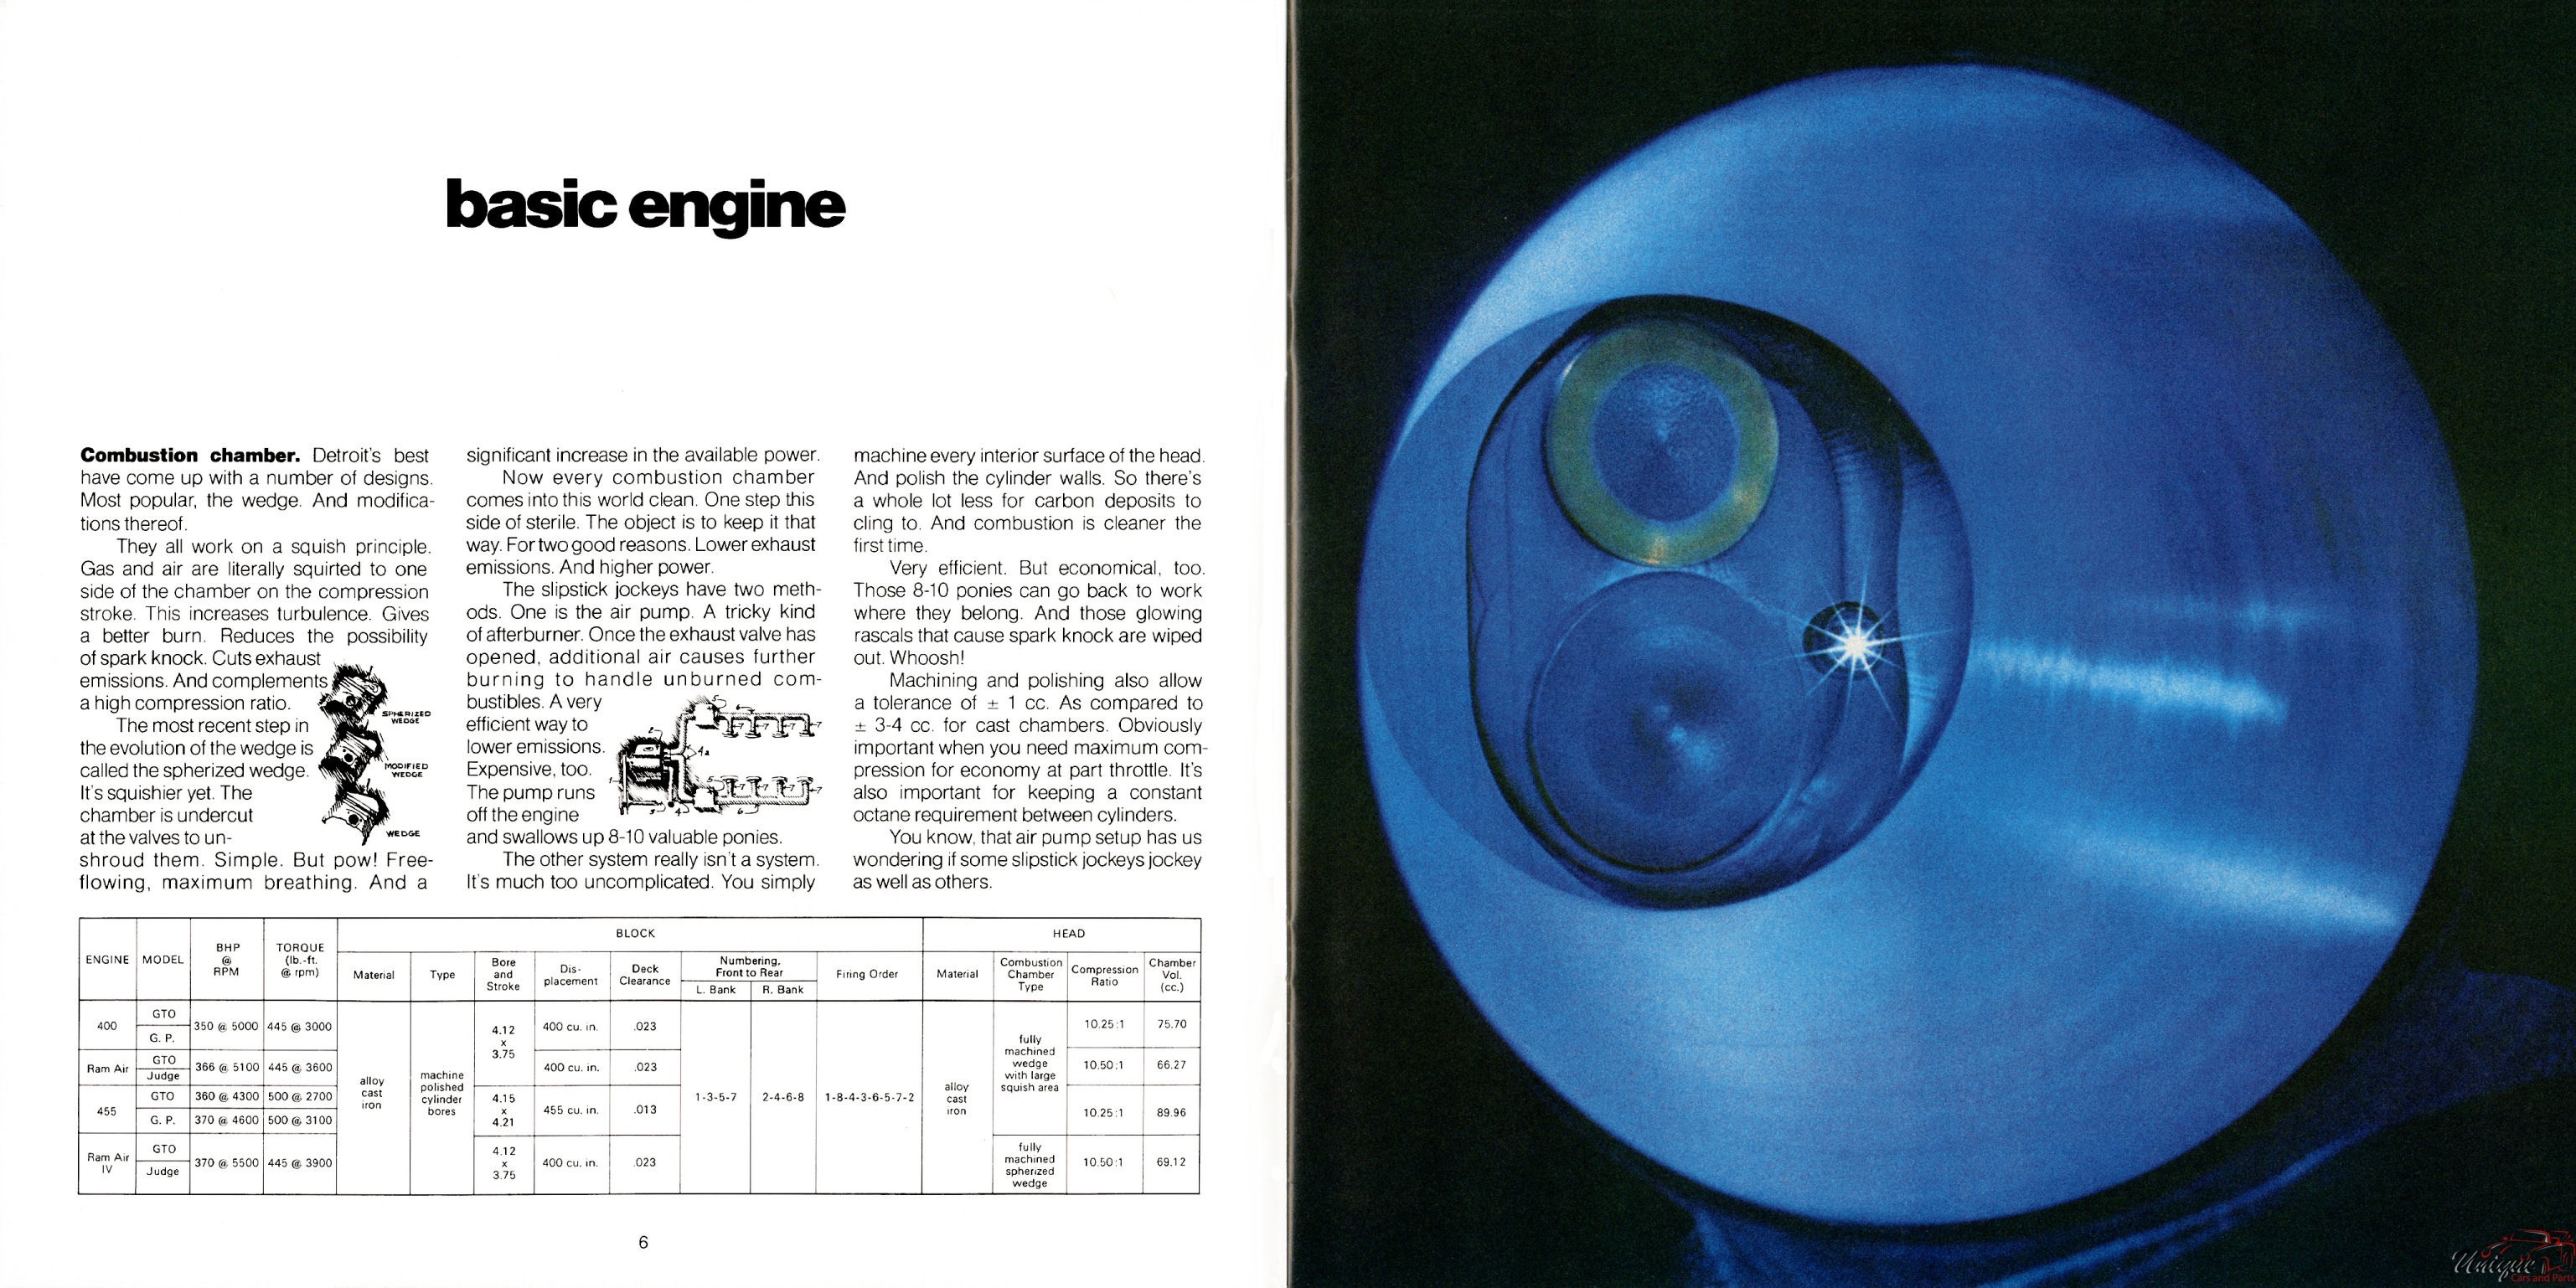 1970 Pontiac Performance Brochure Page 5